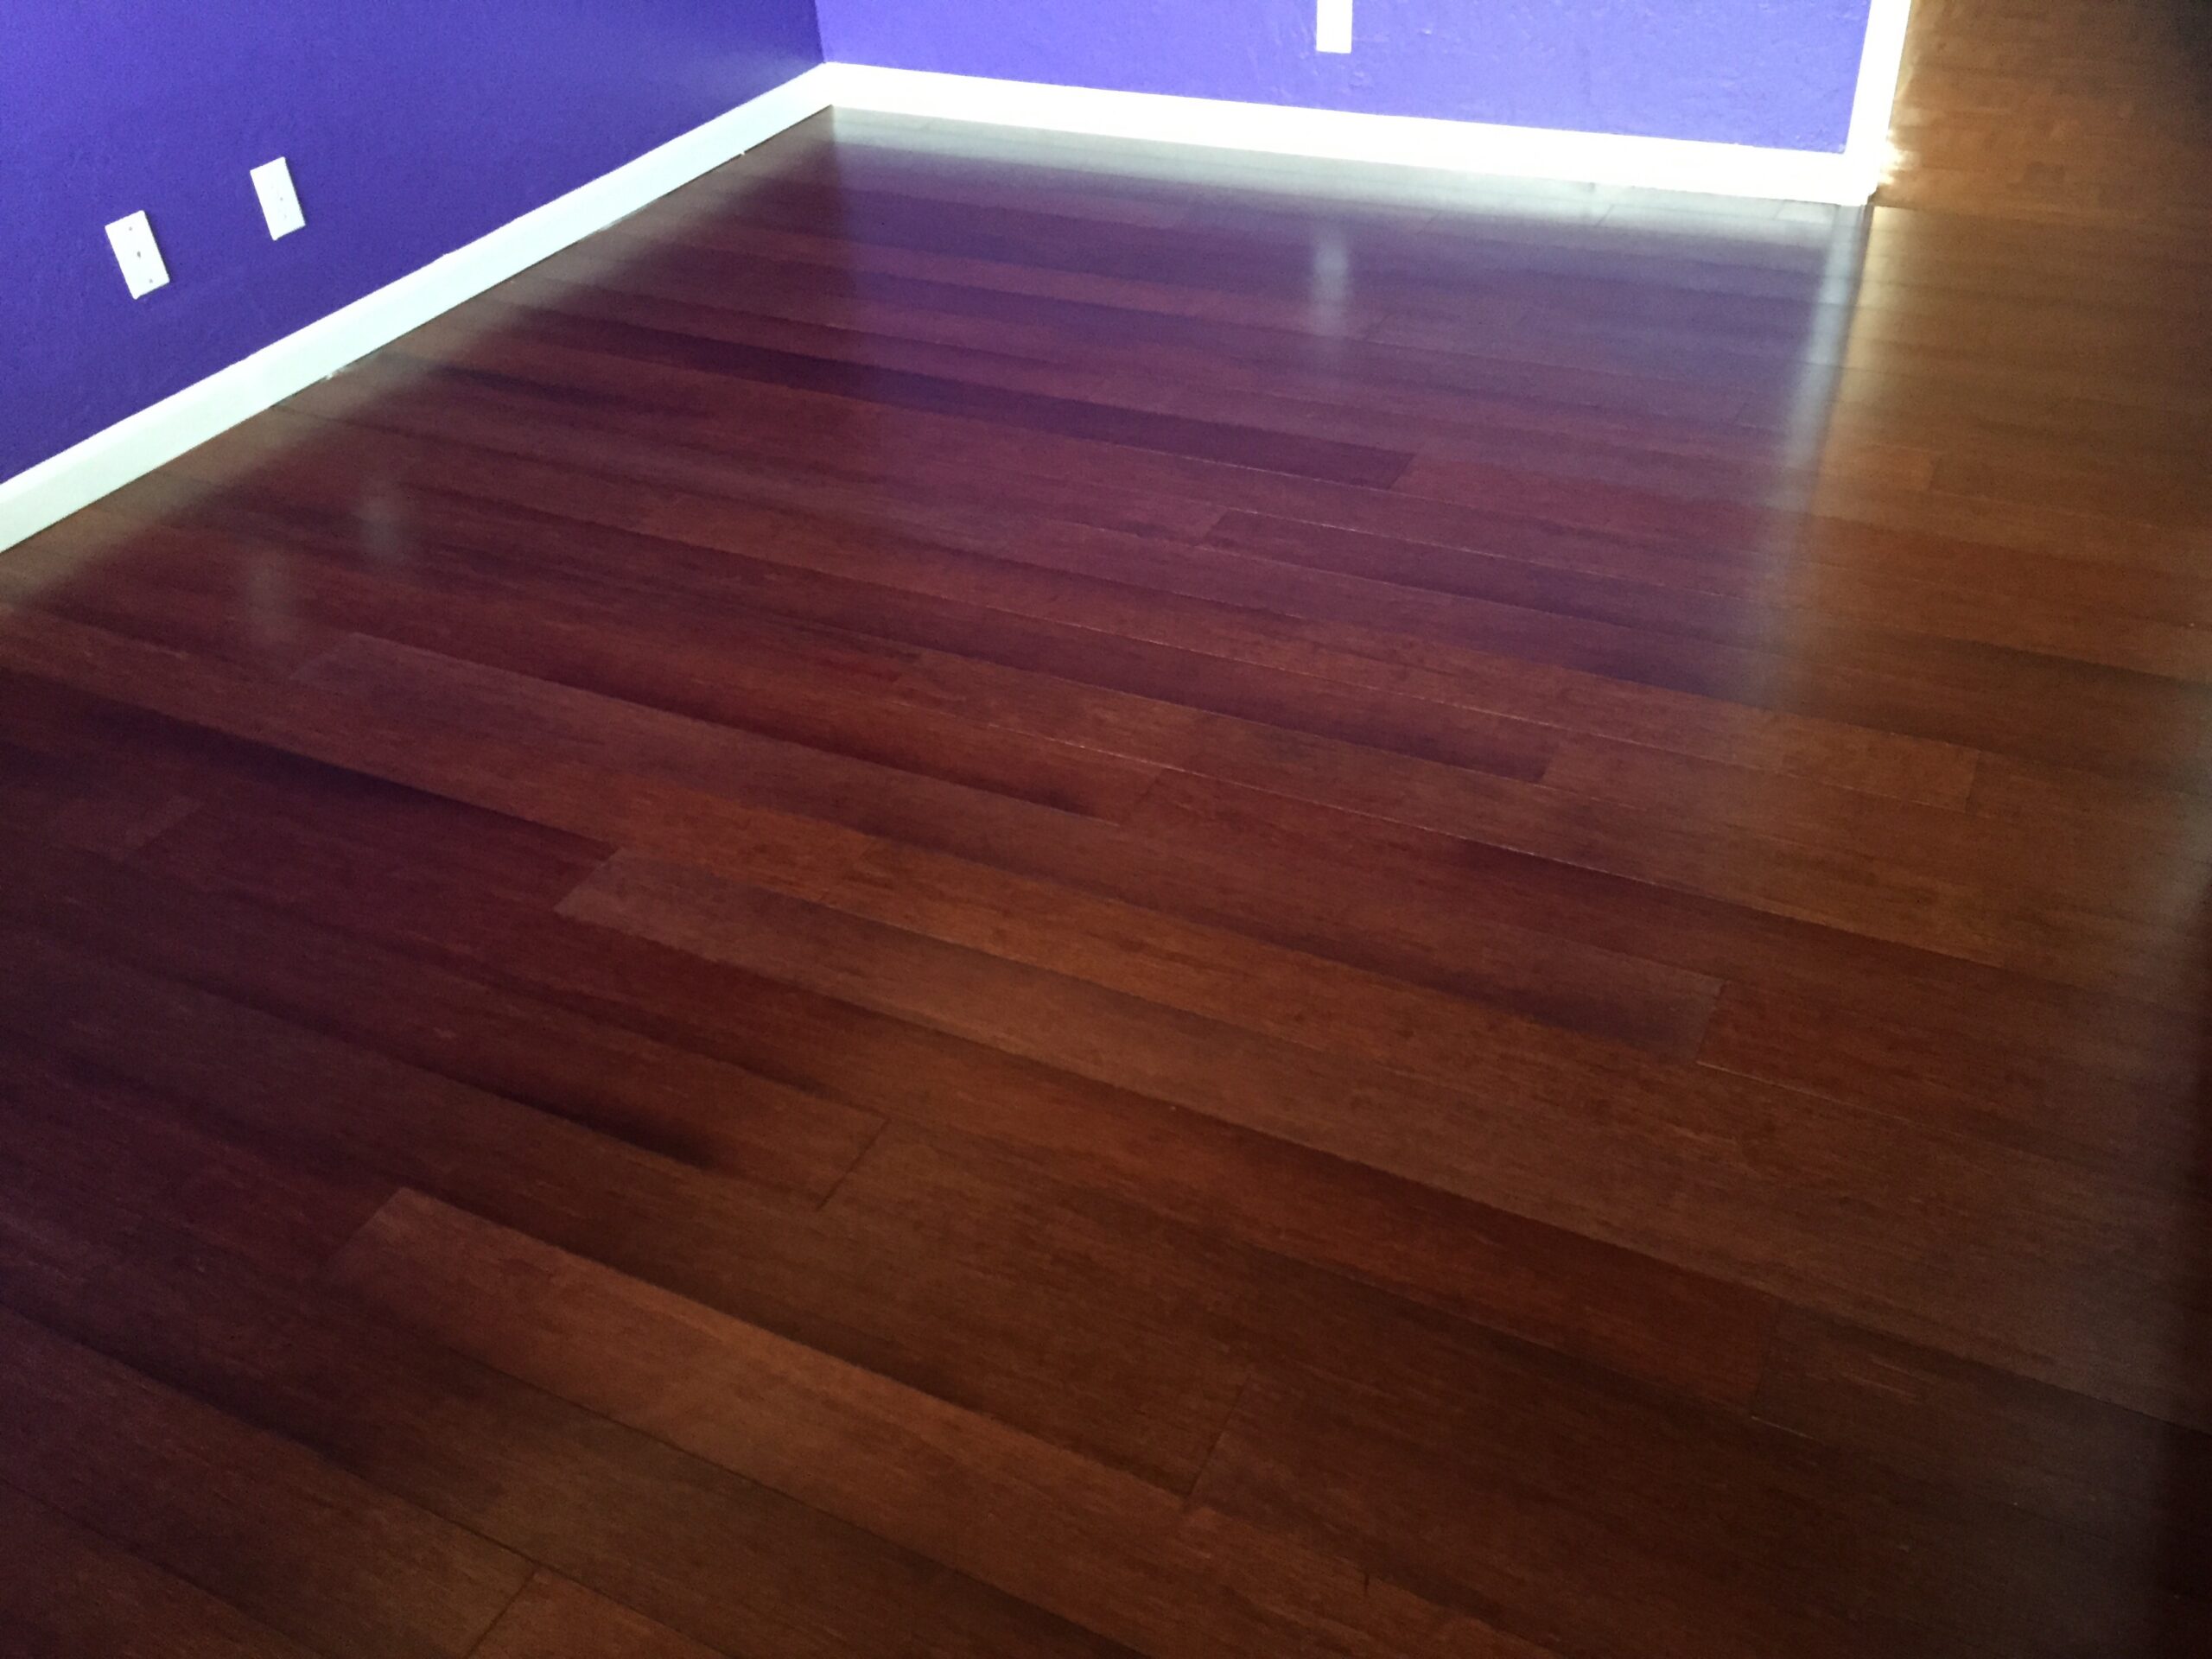 New Floors:  Almost